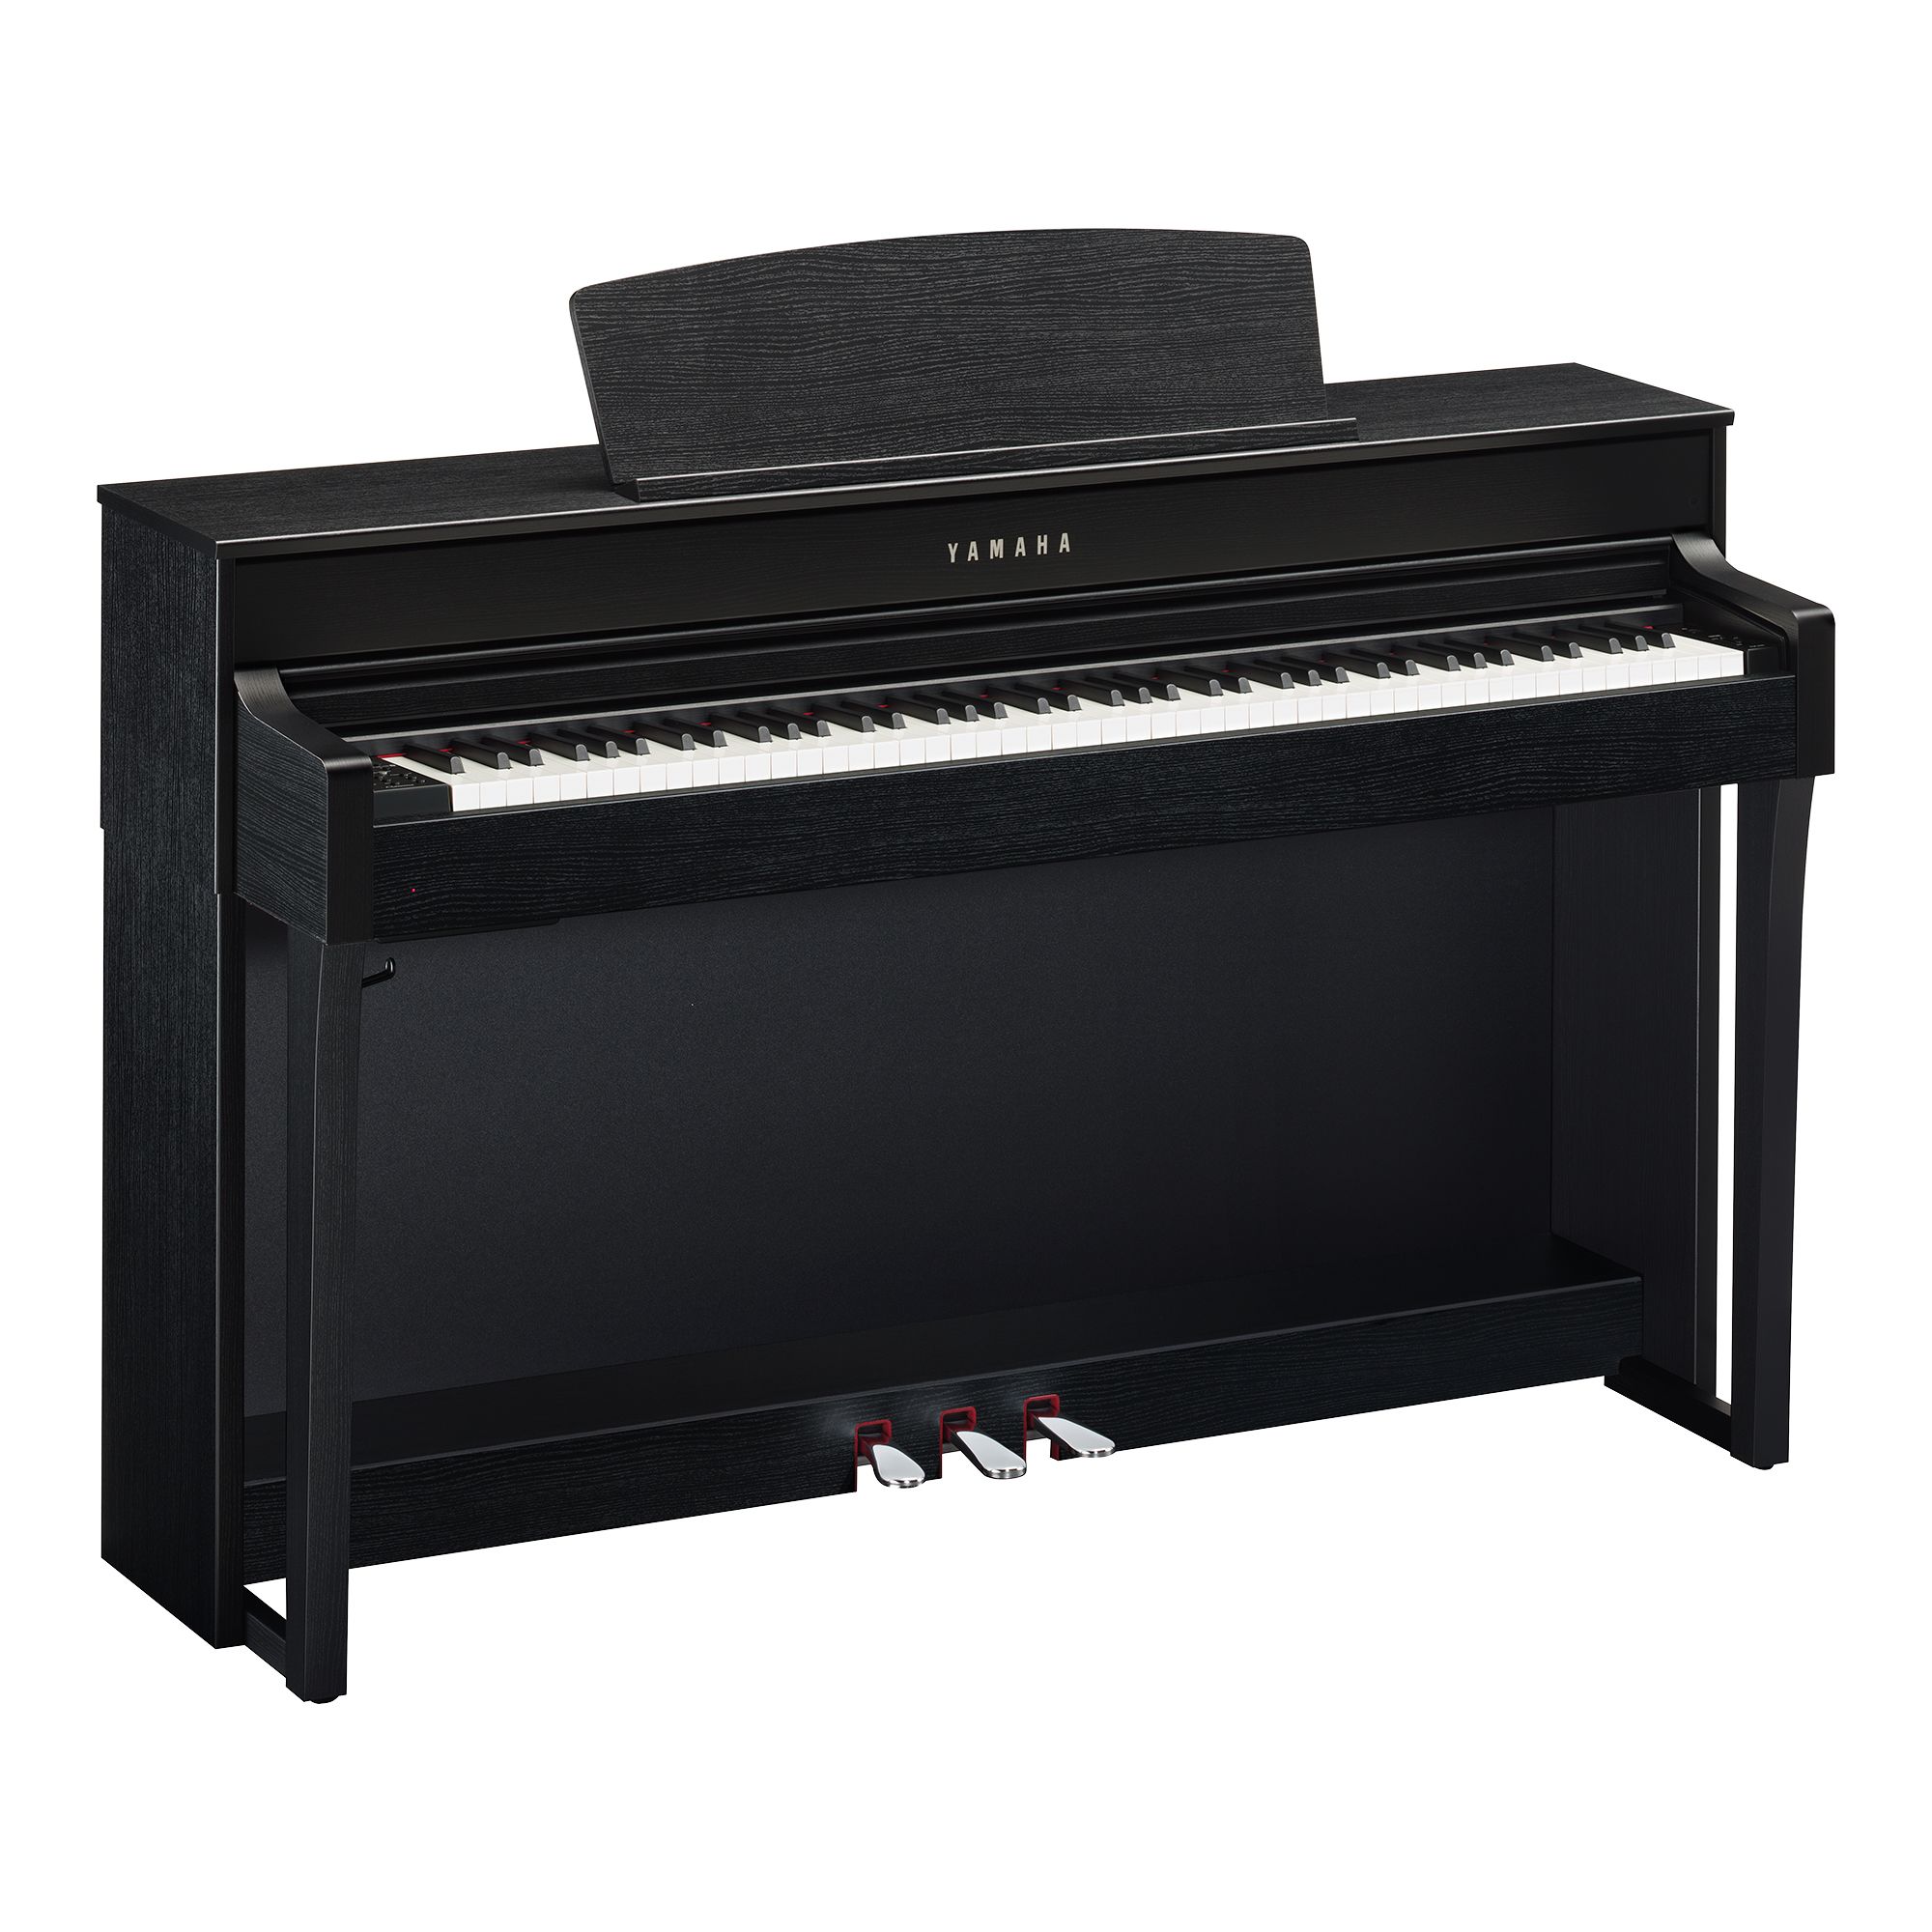 CLP-645 - Overview - Clavinova - Pianos - Musical Instruments ...